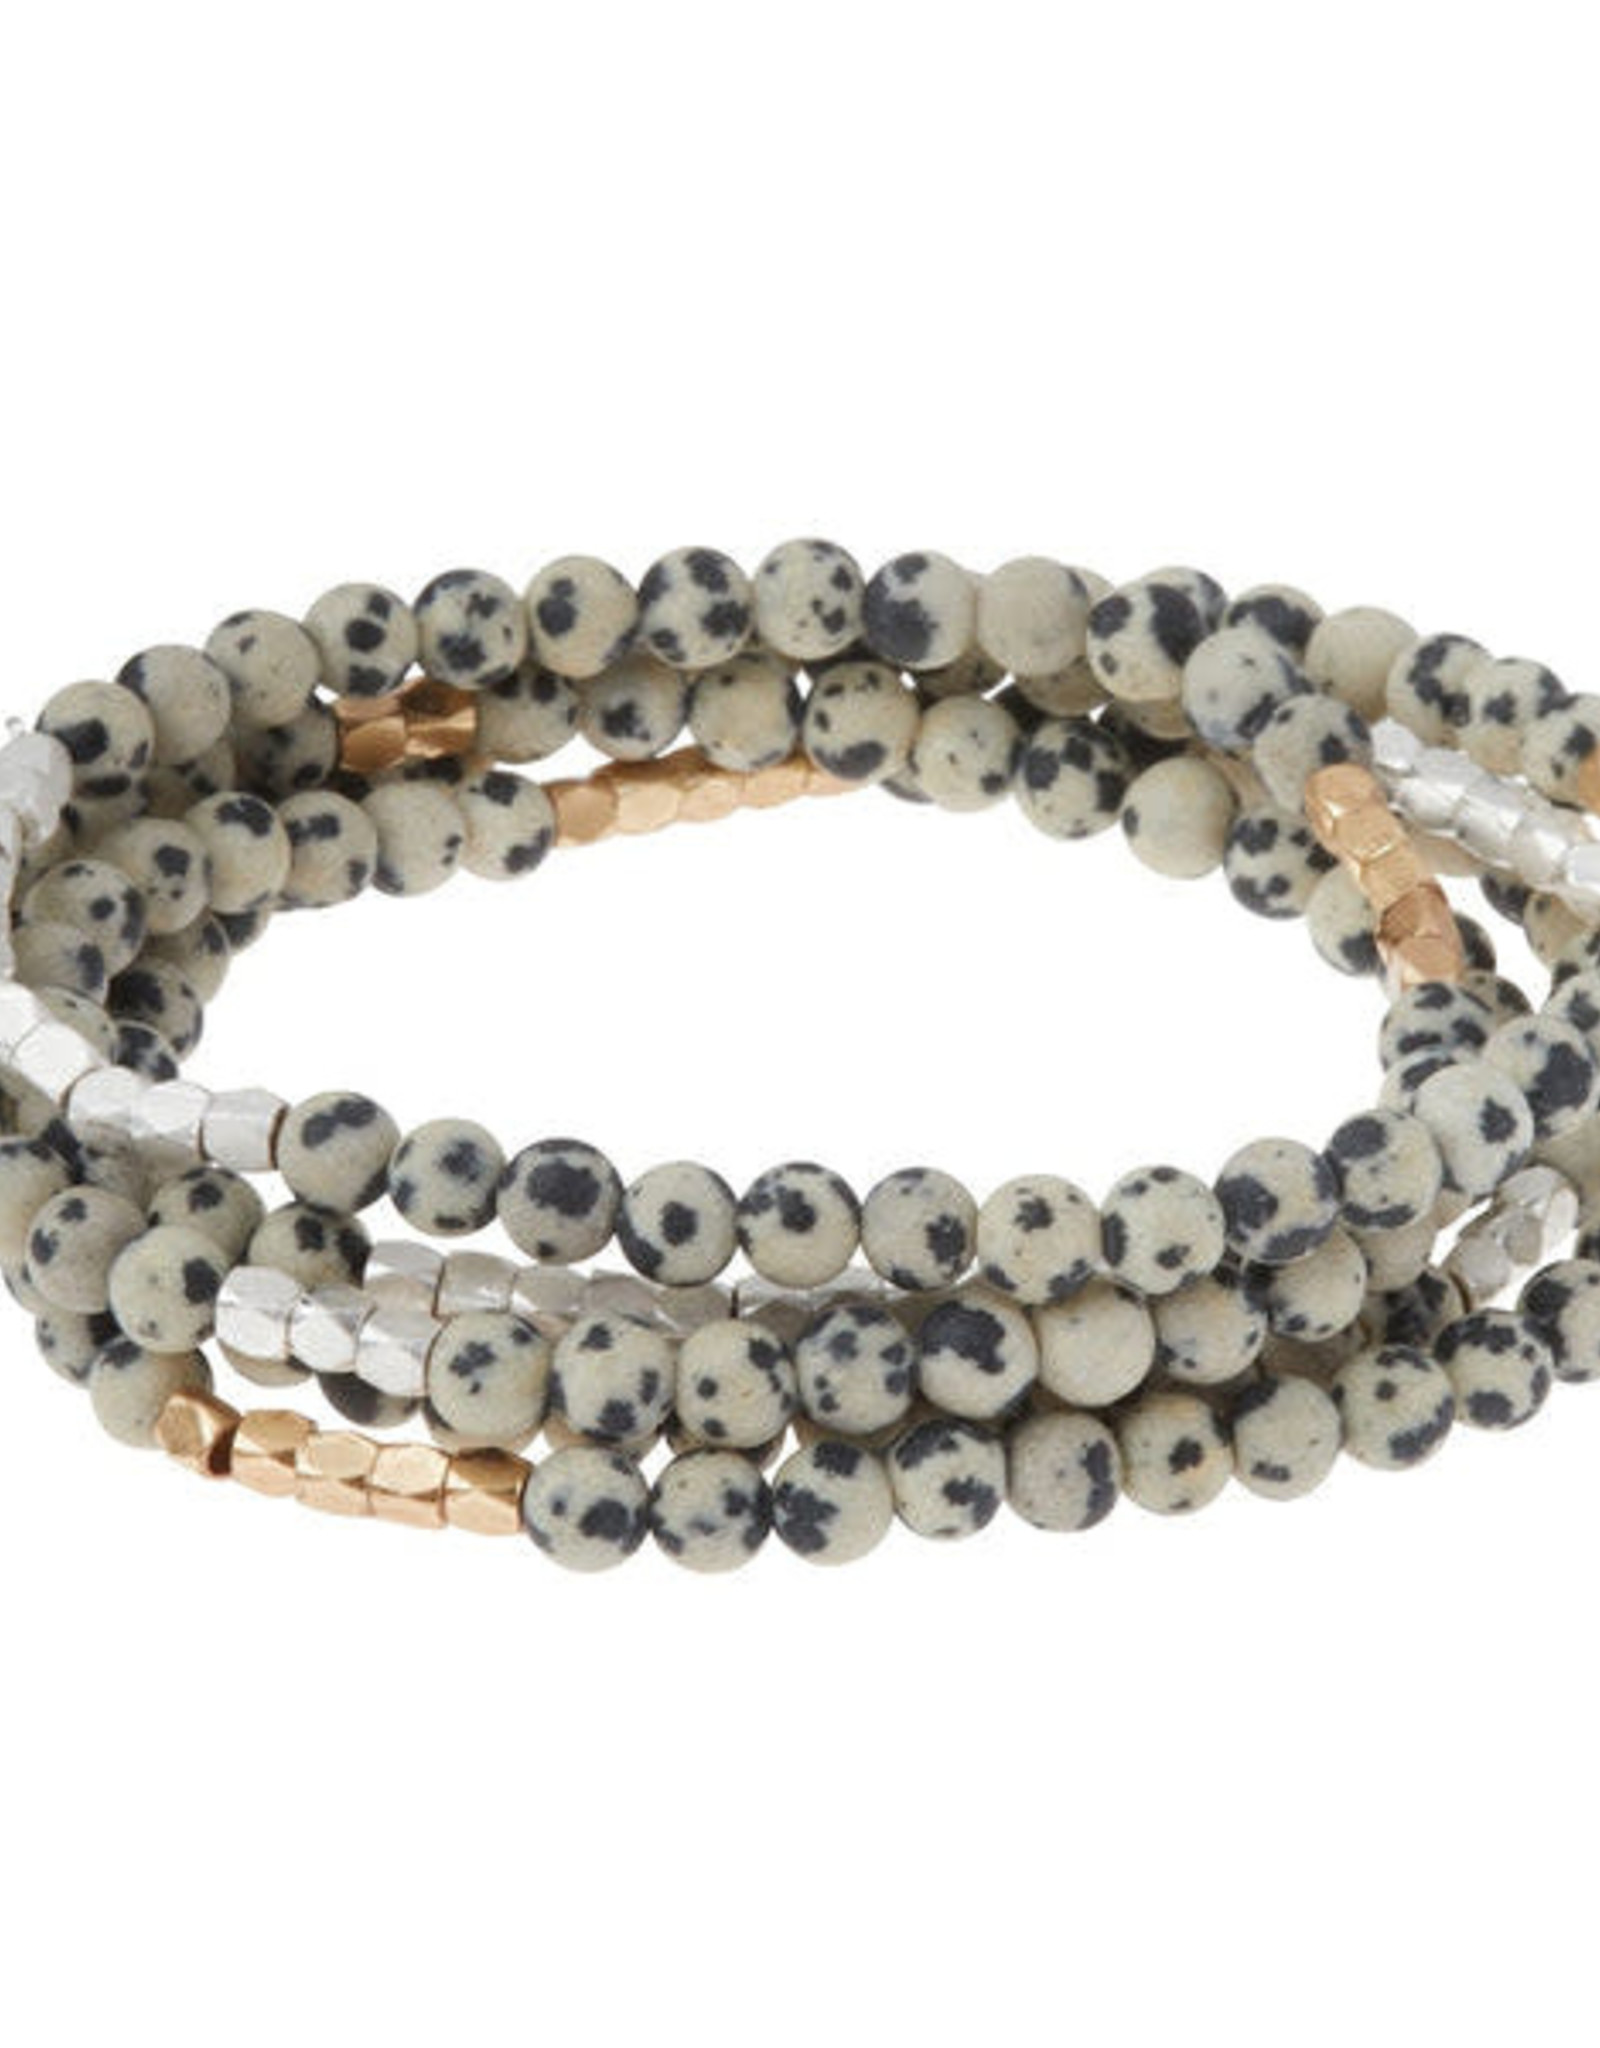 Dalmation Jasper Wrap Bracelet/Necklace